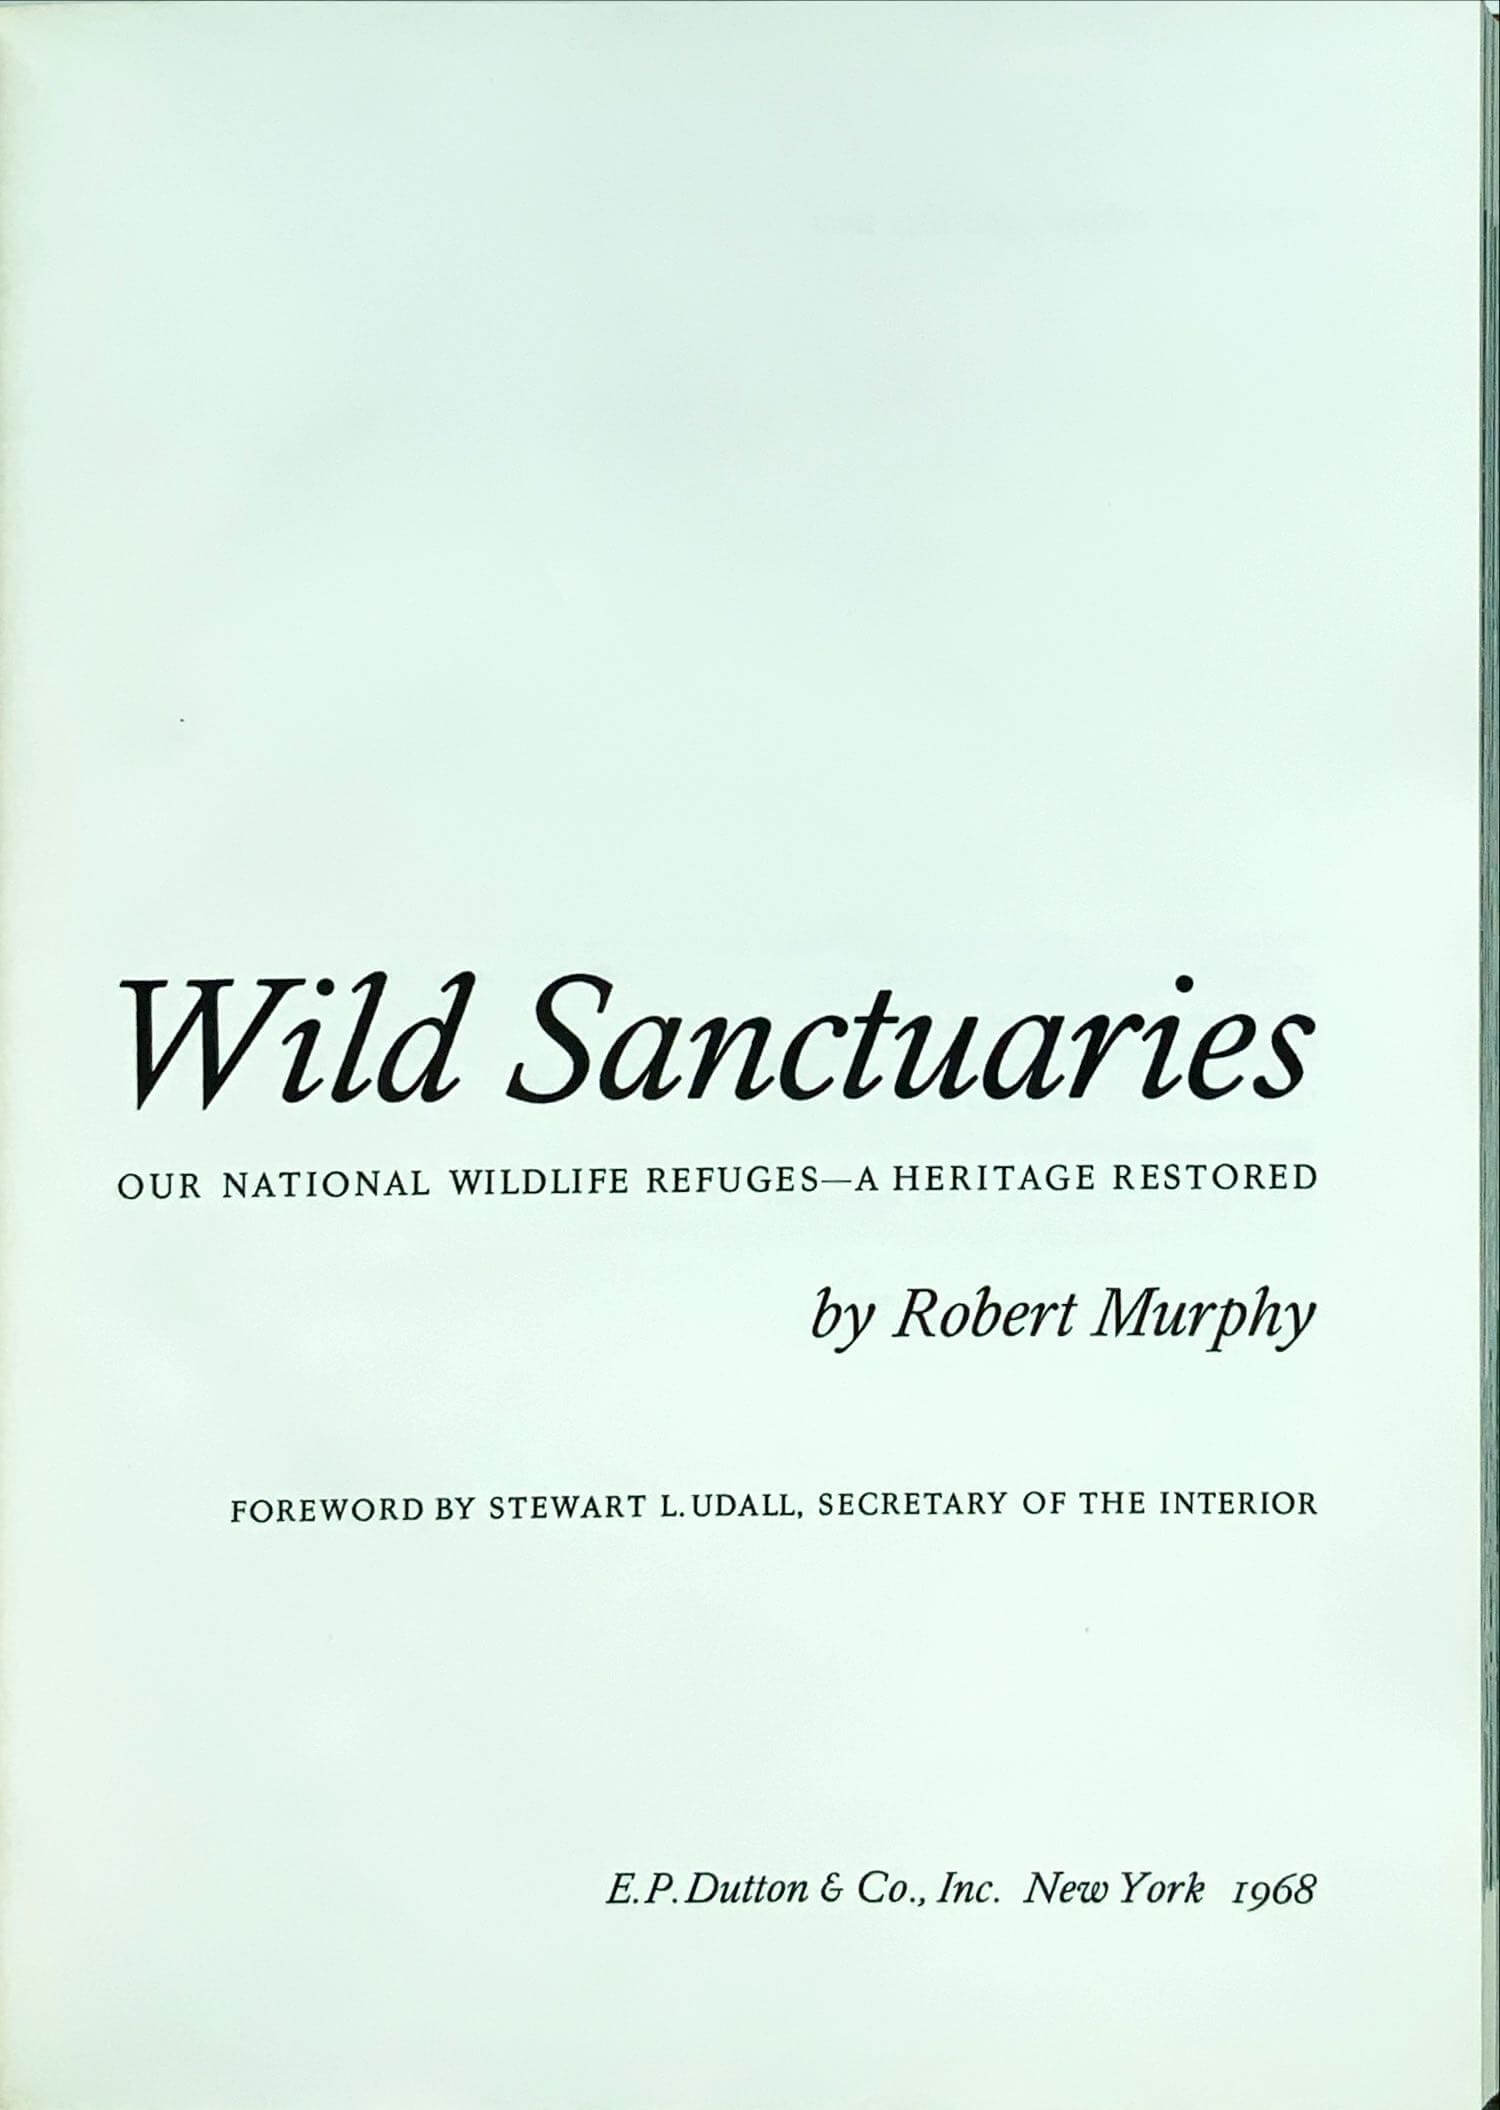 Conzett & Huber: Wild Sanctuaries. Our National Wildlife Refuges - A heritage Restored, by Robert Murphy, 1968